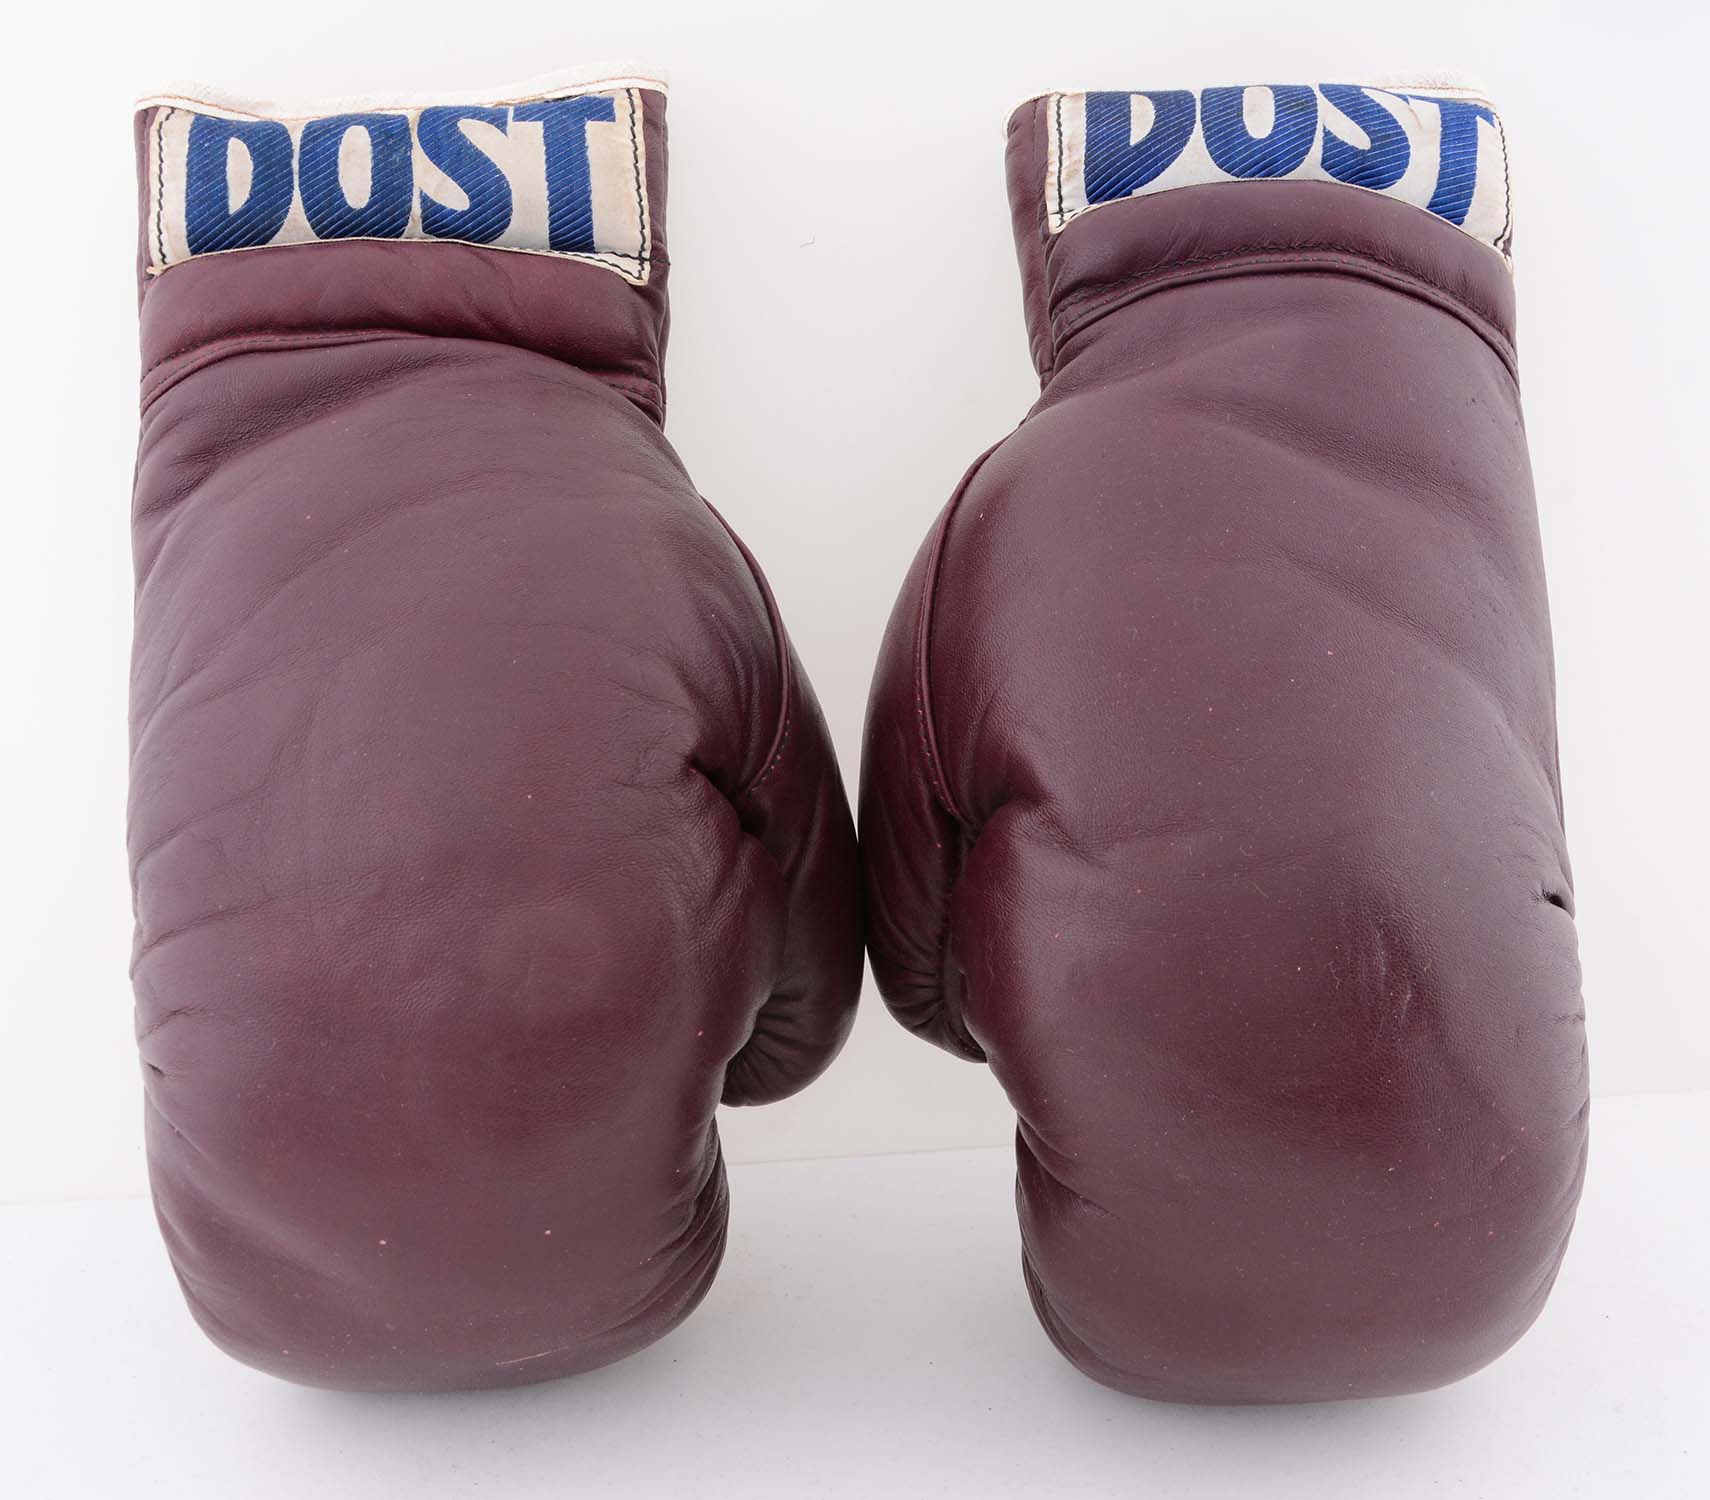 1950's Cassius Clay Amateur Training Gloves, estimated at $3,000-5,000.